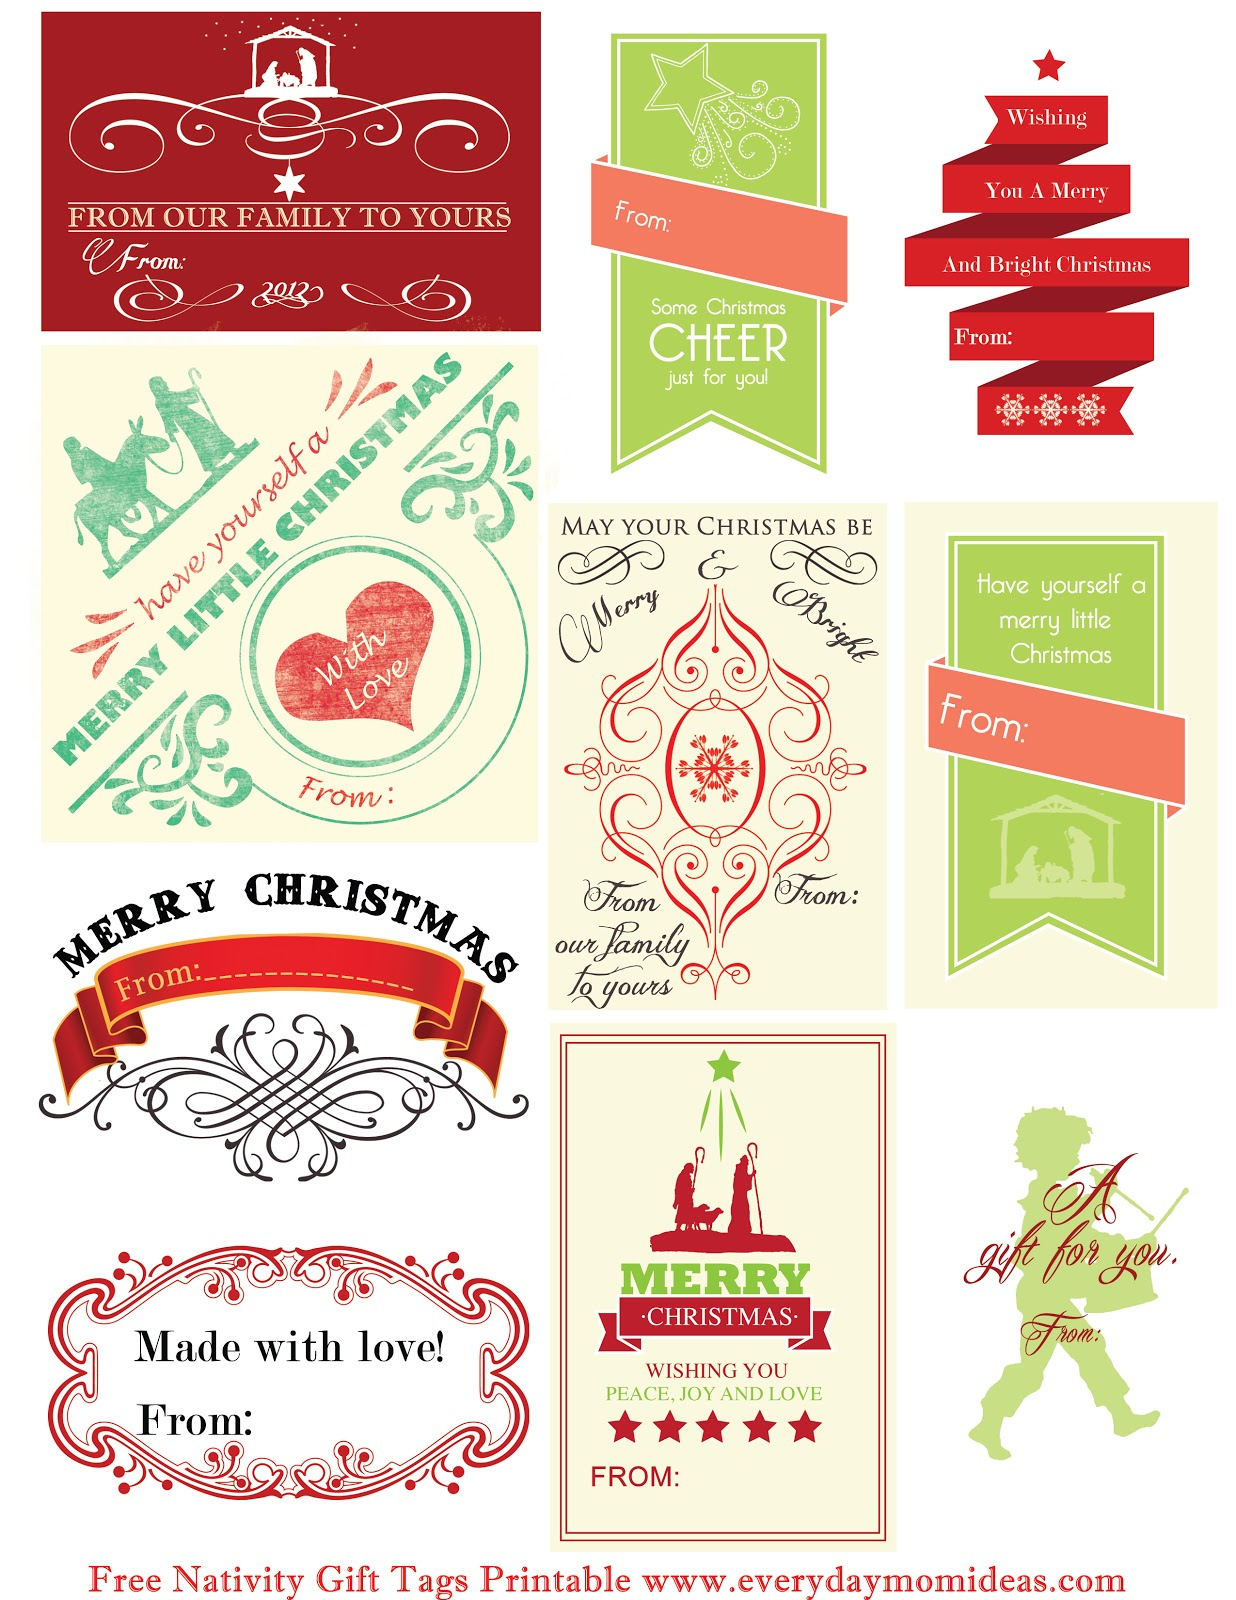 Free Nativity Gift Tags Printable - Everyday Mom Ideas - Free Printable Gift Tags Personalized